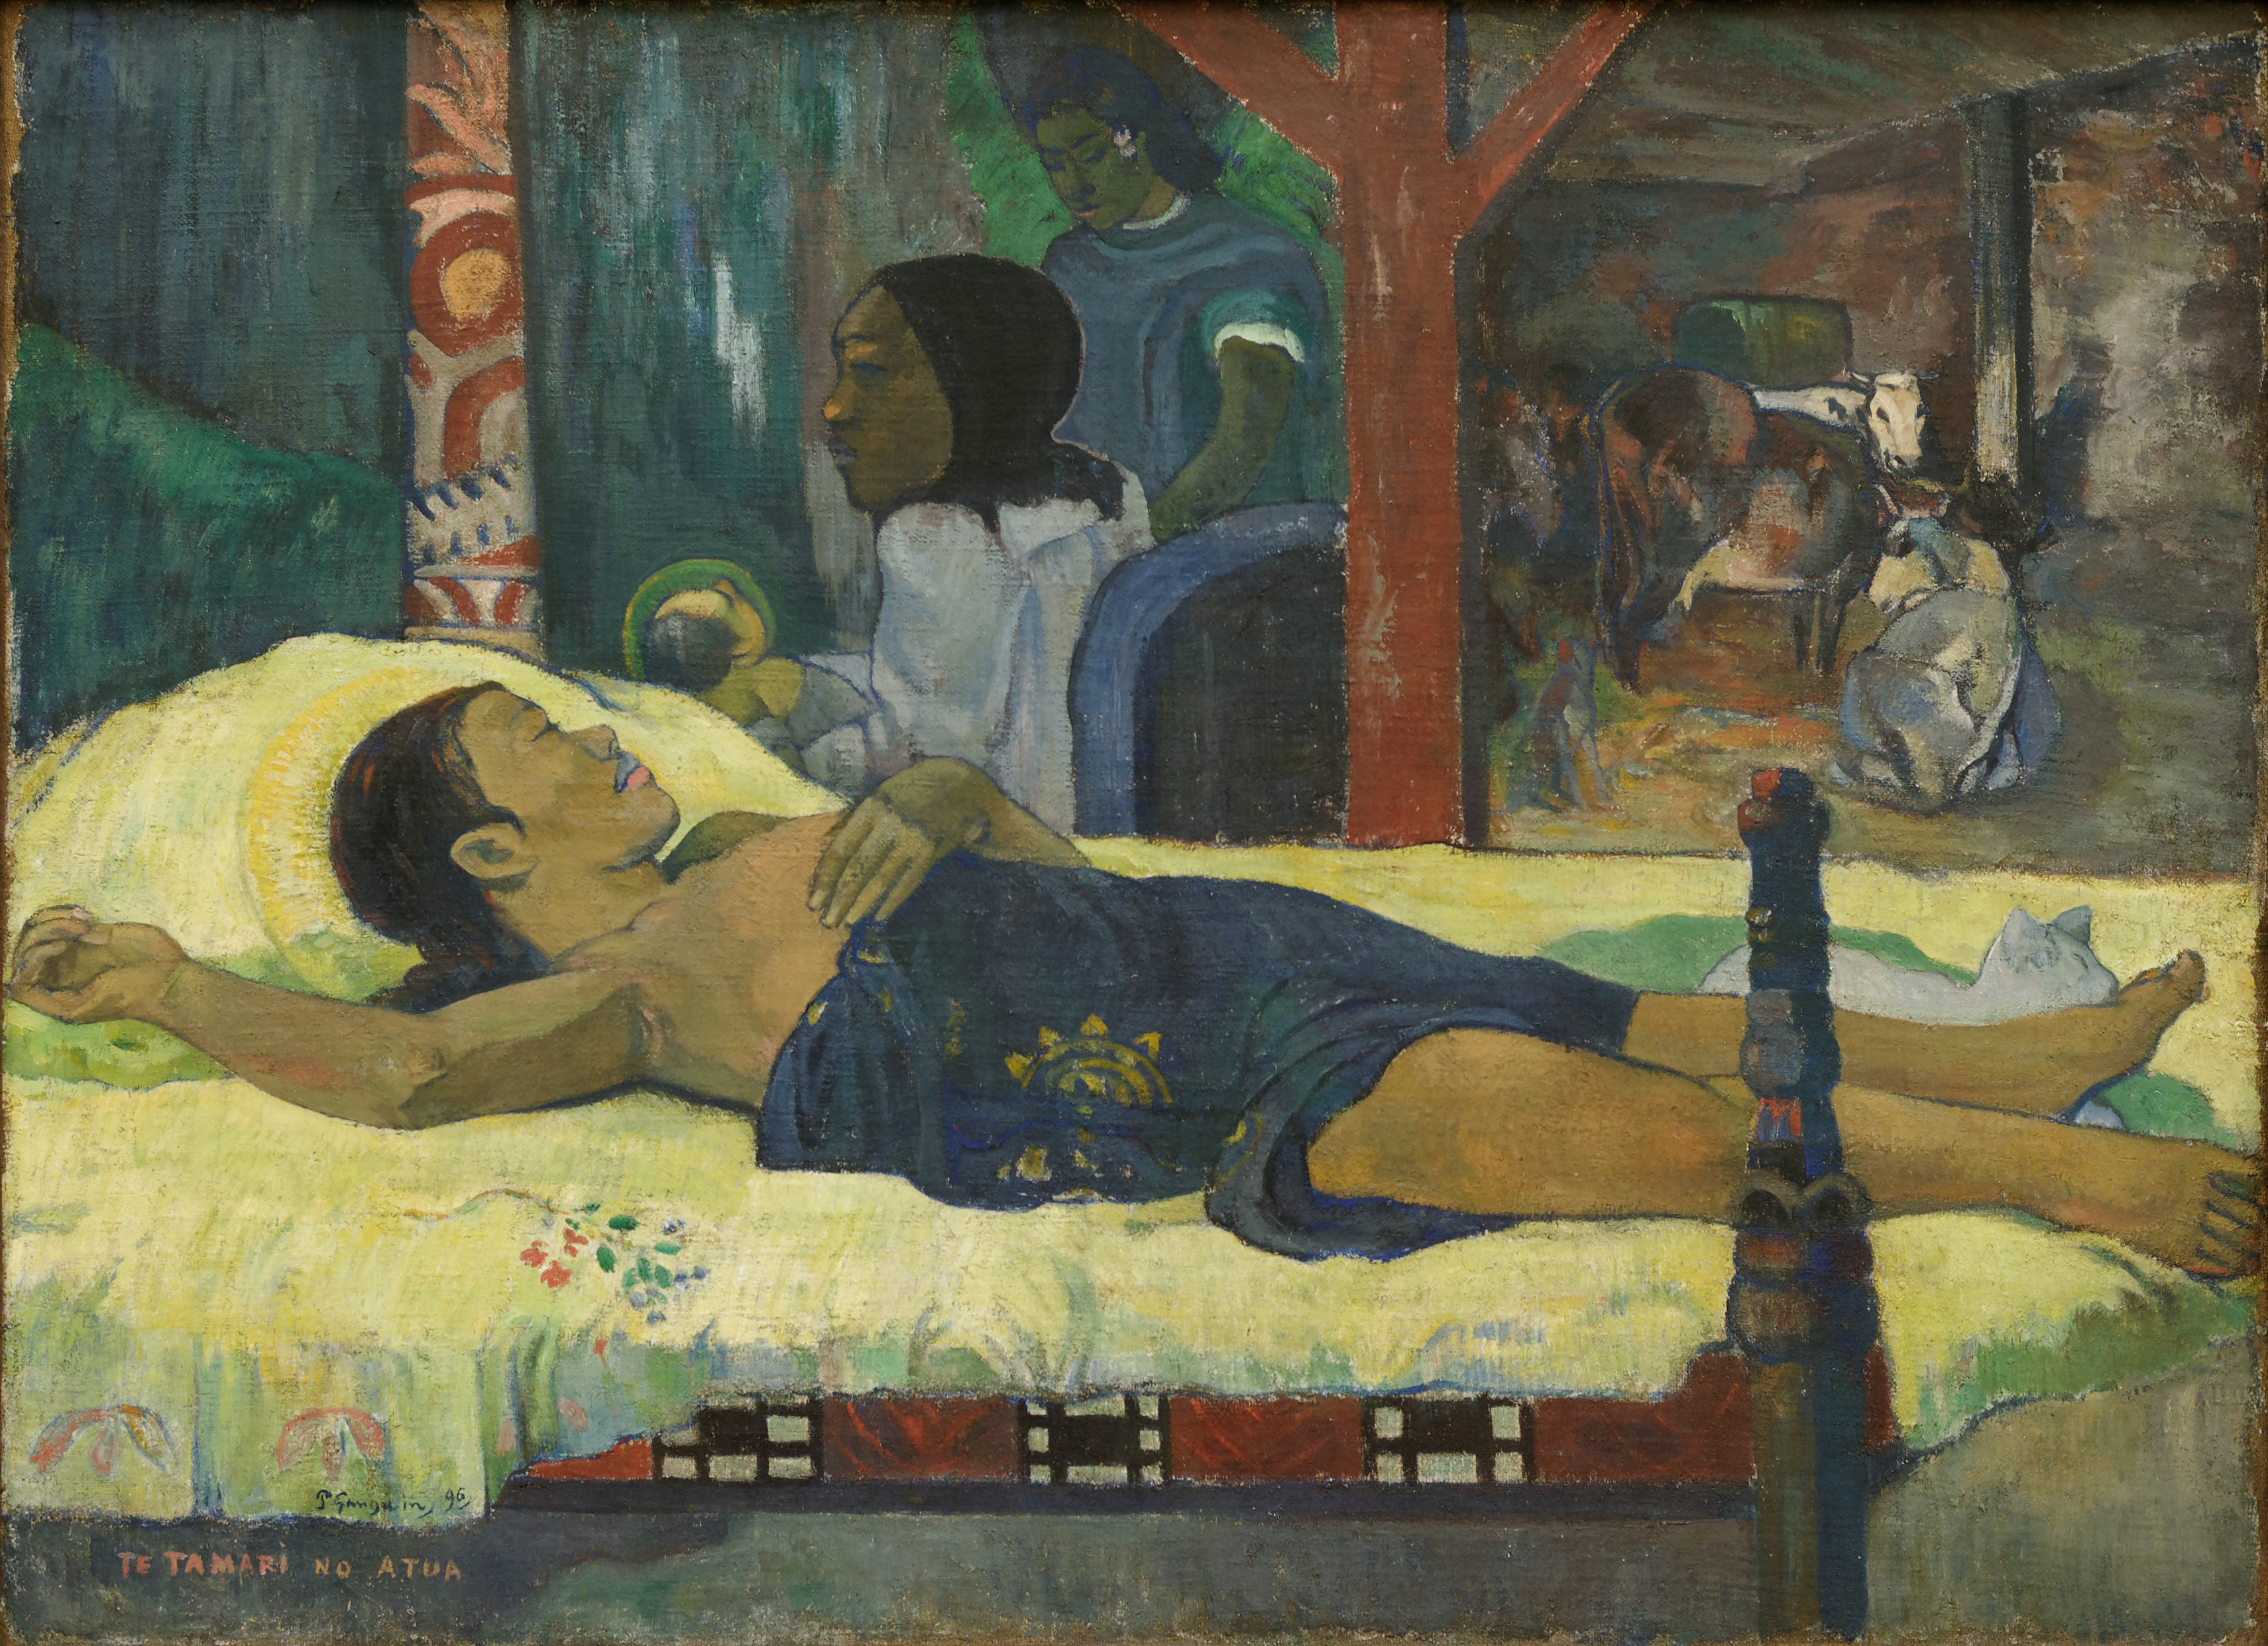 上帝之子 by 保罗 高更 - 1896 - 94 x 129 cm 